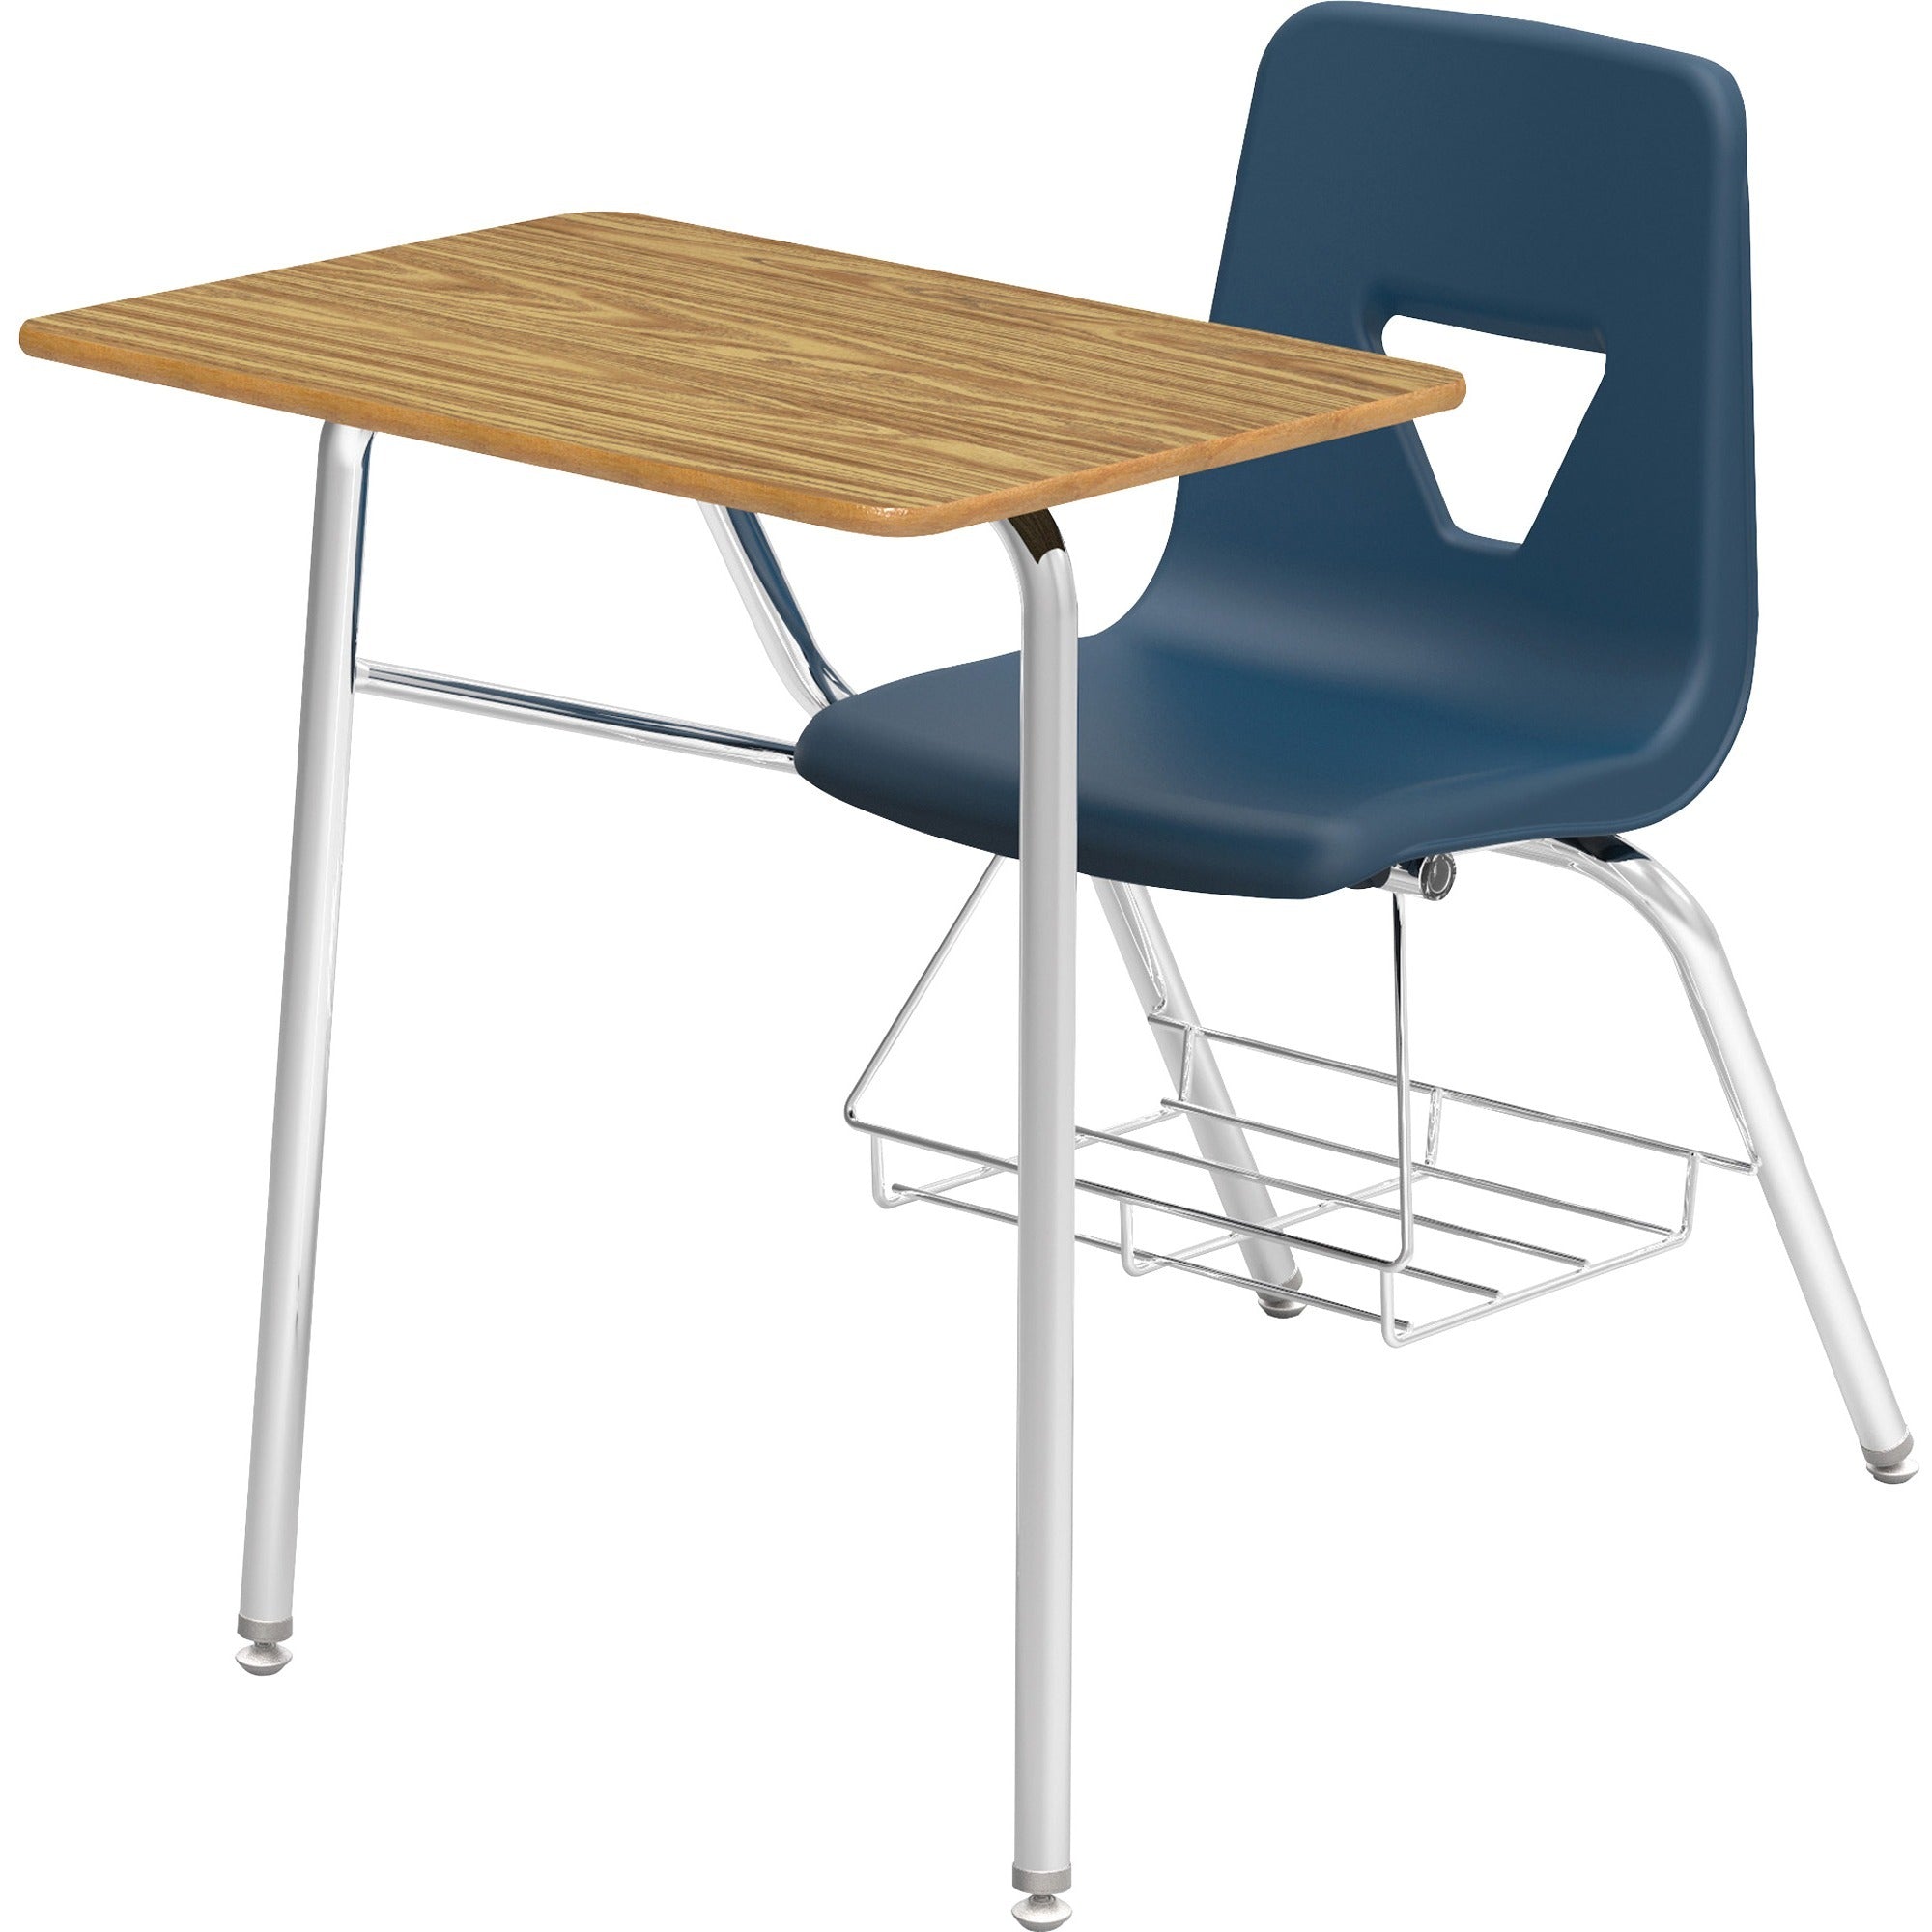 lorell-student-chair-desk-combo-desks-for-table-topmedium-oak-rectangle-high-pressure-laminate-hpl-top-four-leg-base-4-legs-x-24-table-top-width-x-18-table-top-depth-31-height-navy-polypropylene-2-carton_llr99914 - 1